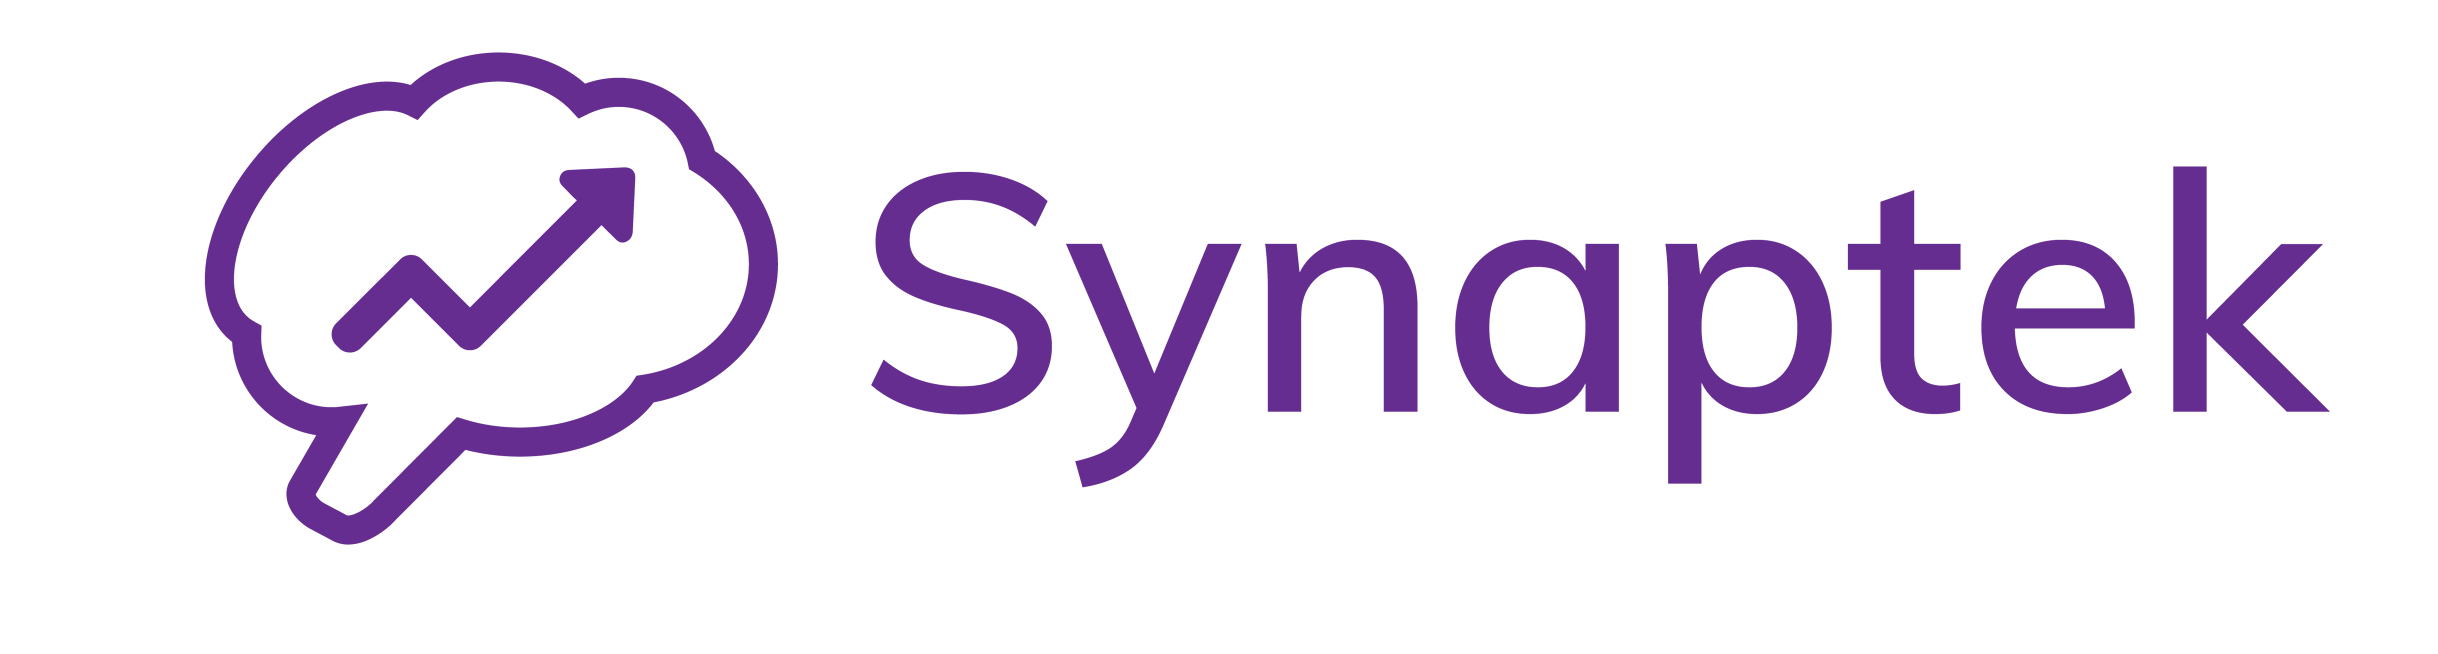 synaptek.md logo